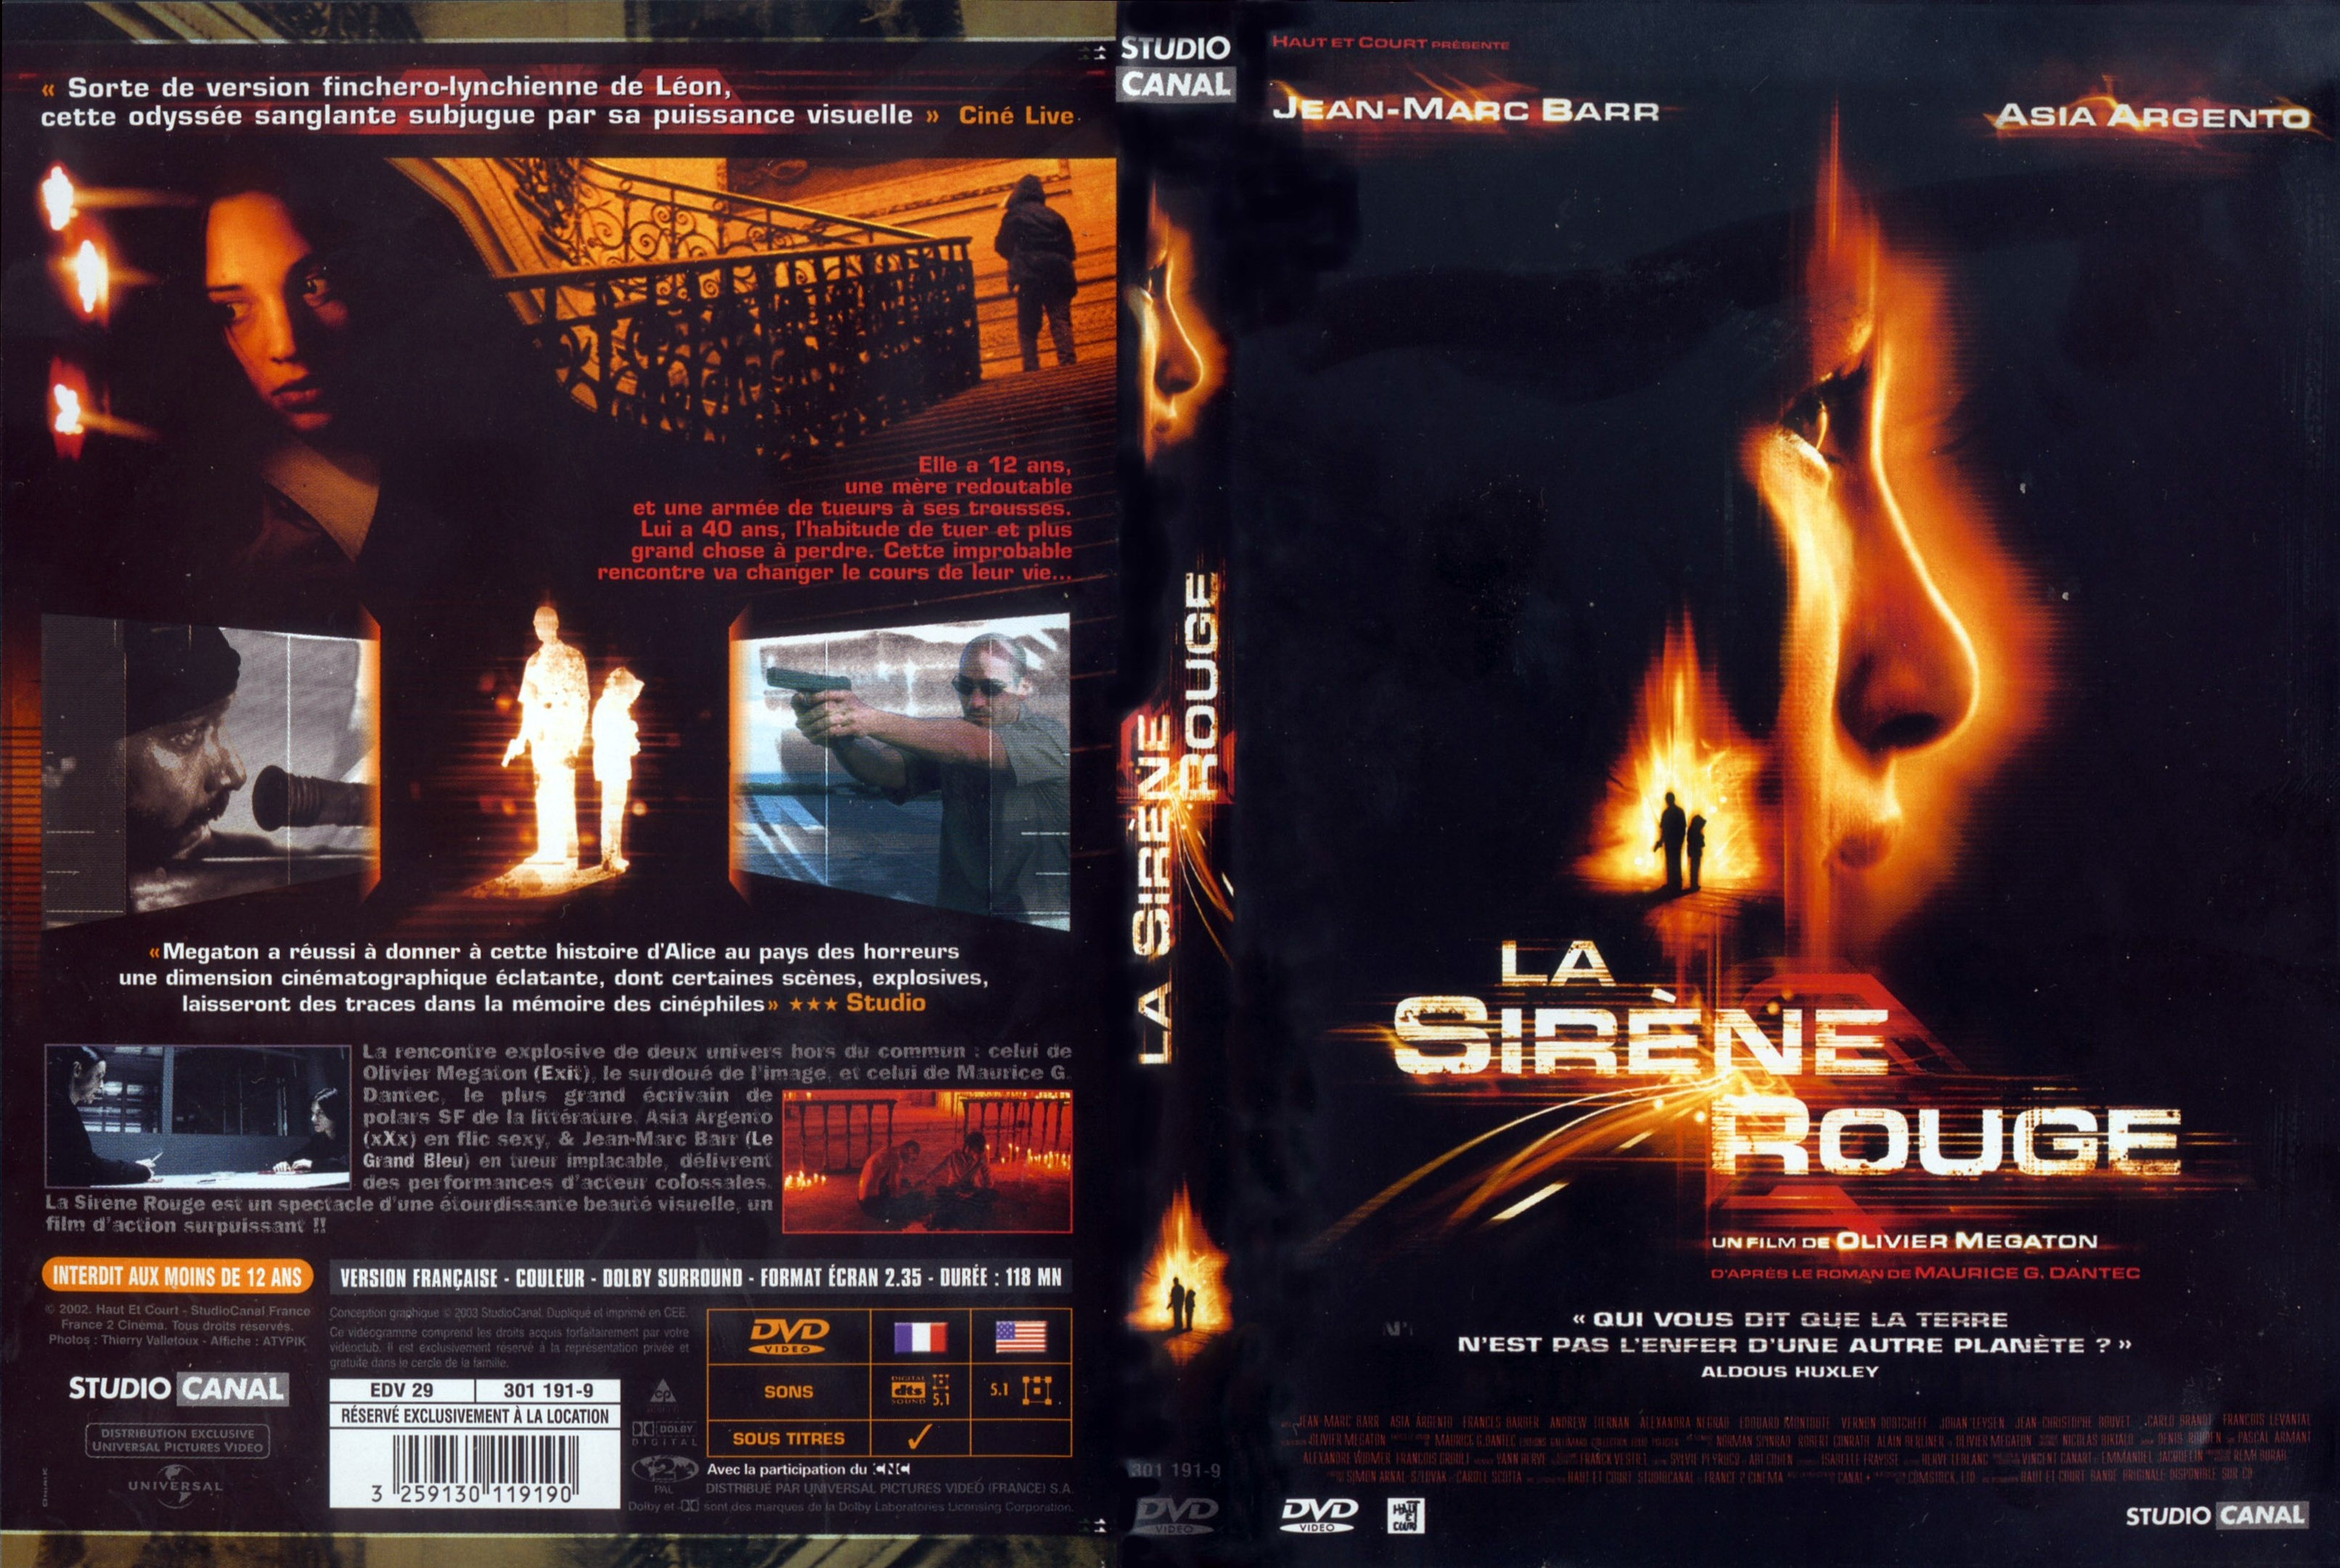 Jaquette DVD La sirene rouge